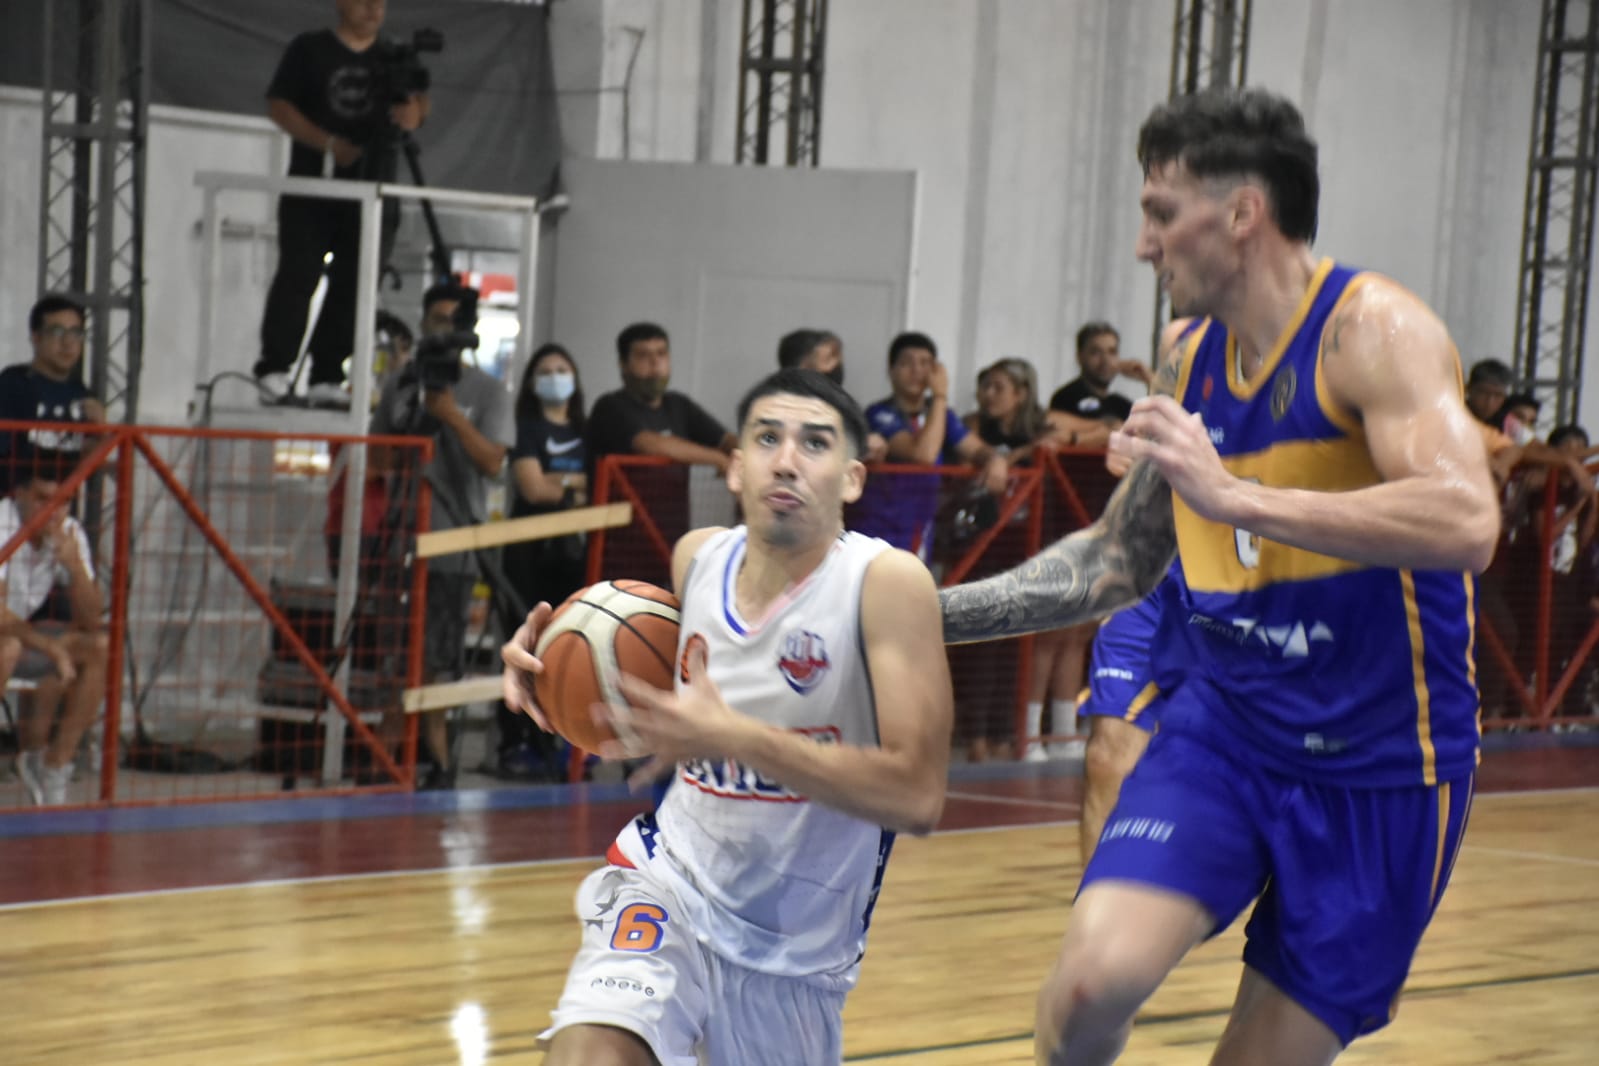 The Rioja Basketball Team took advantage of the Federation